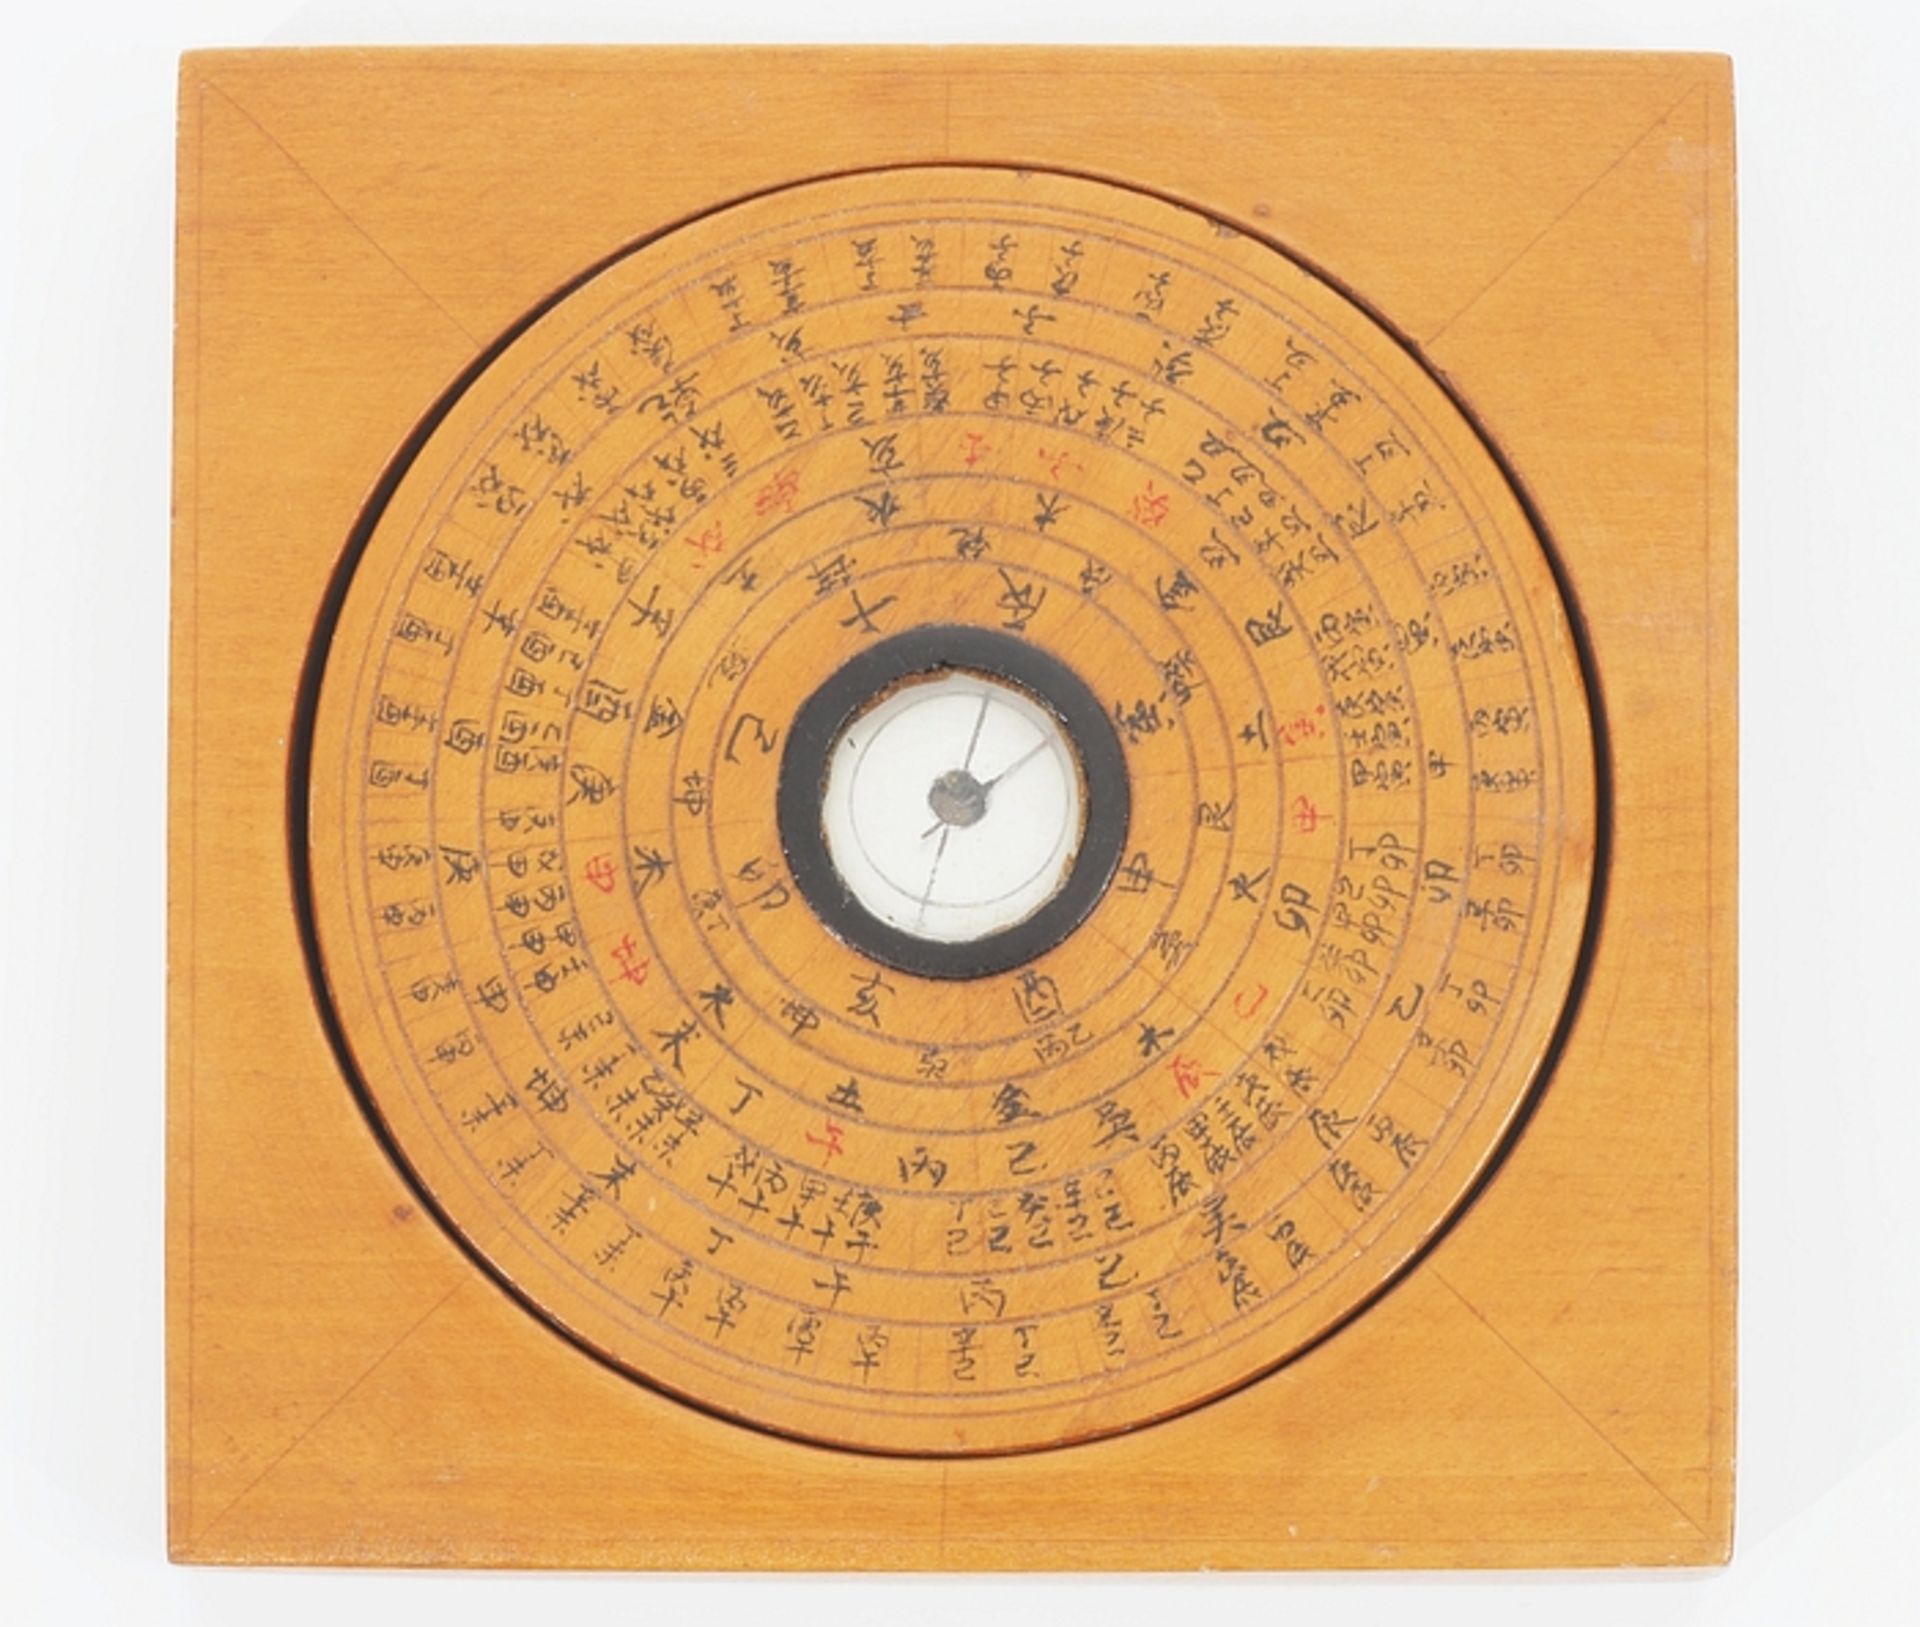 Feng Shui Kompass, China, wohl 19. Jahrhundert. Holzrahmen mit beweglichem Innenkreis, Höhe 2 cm